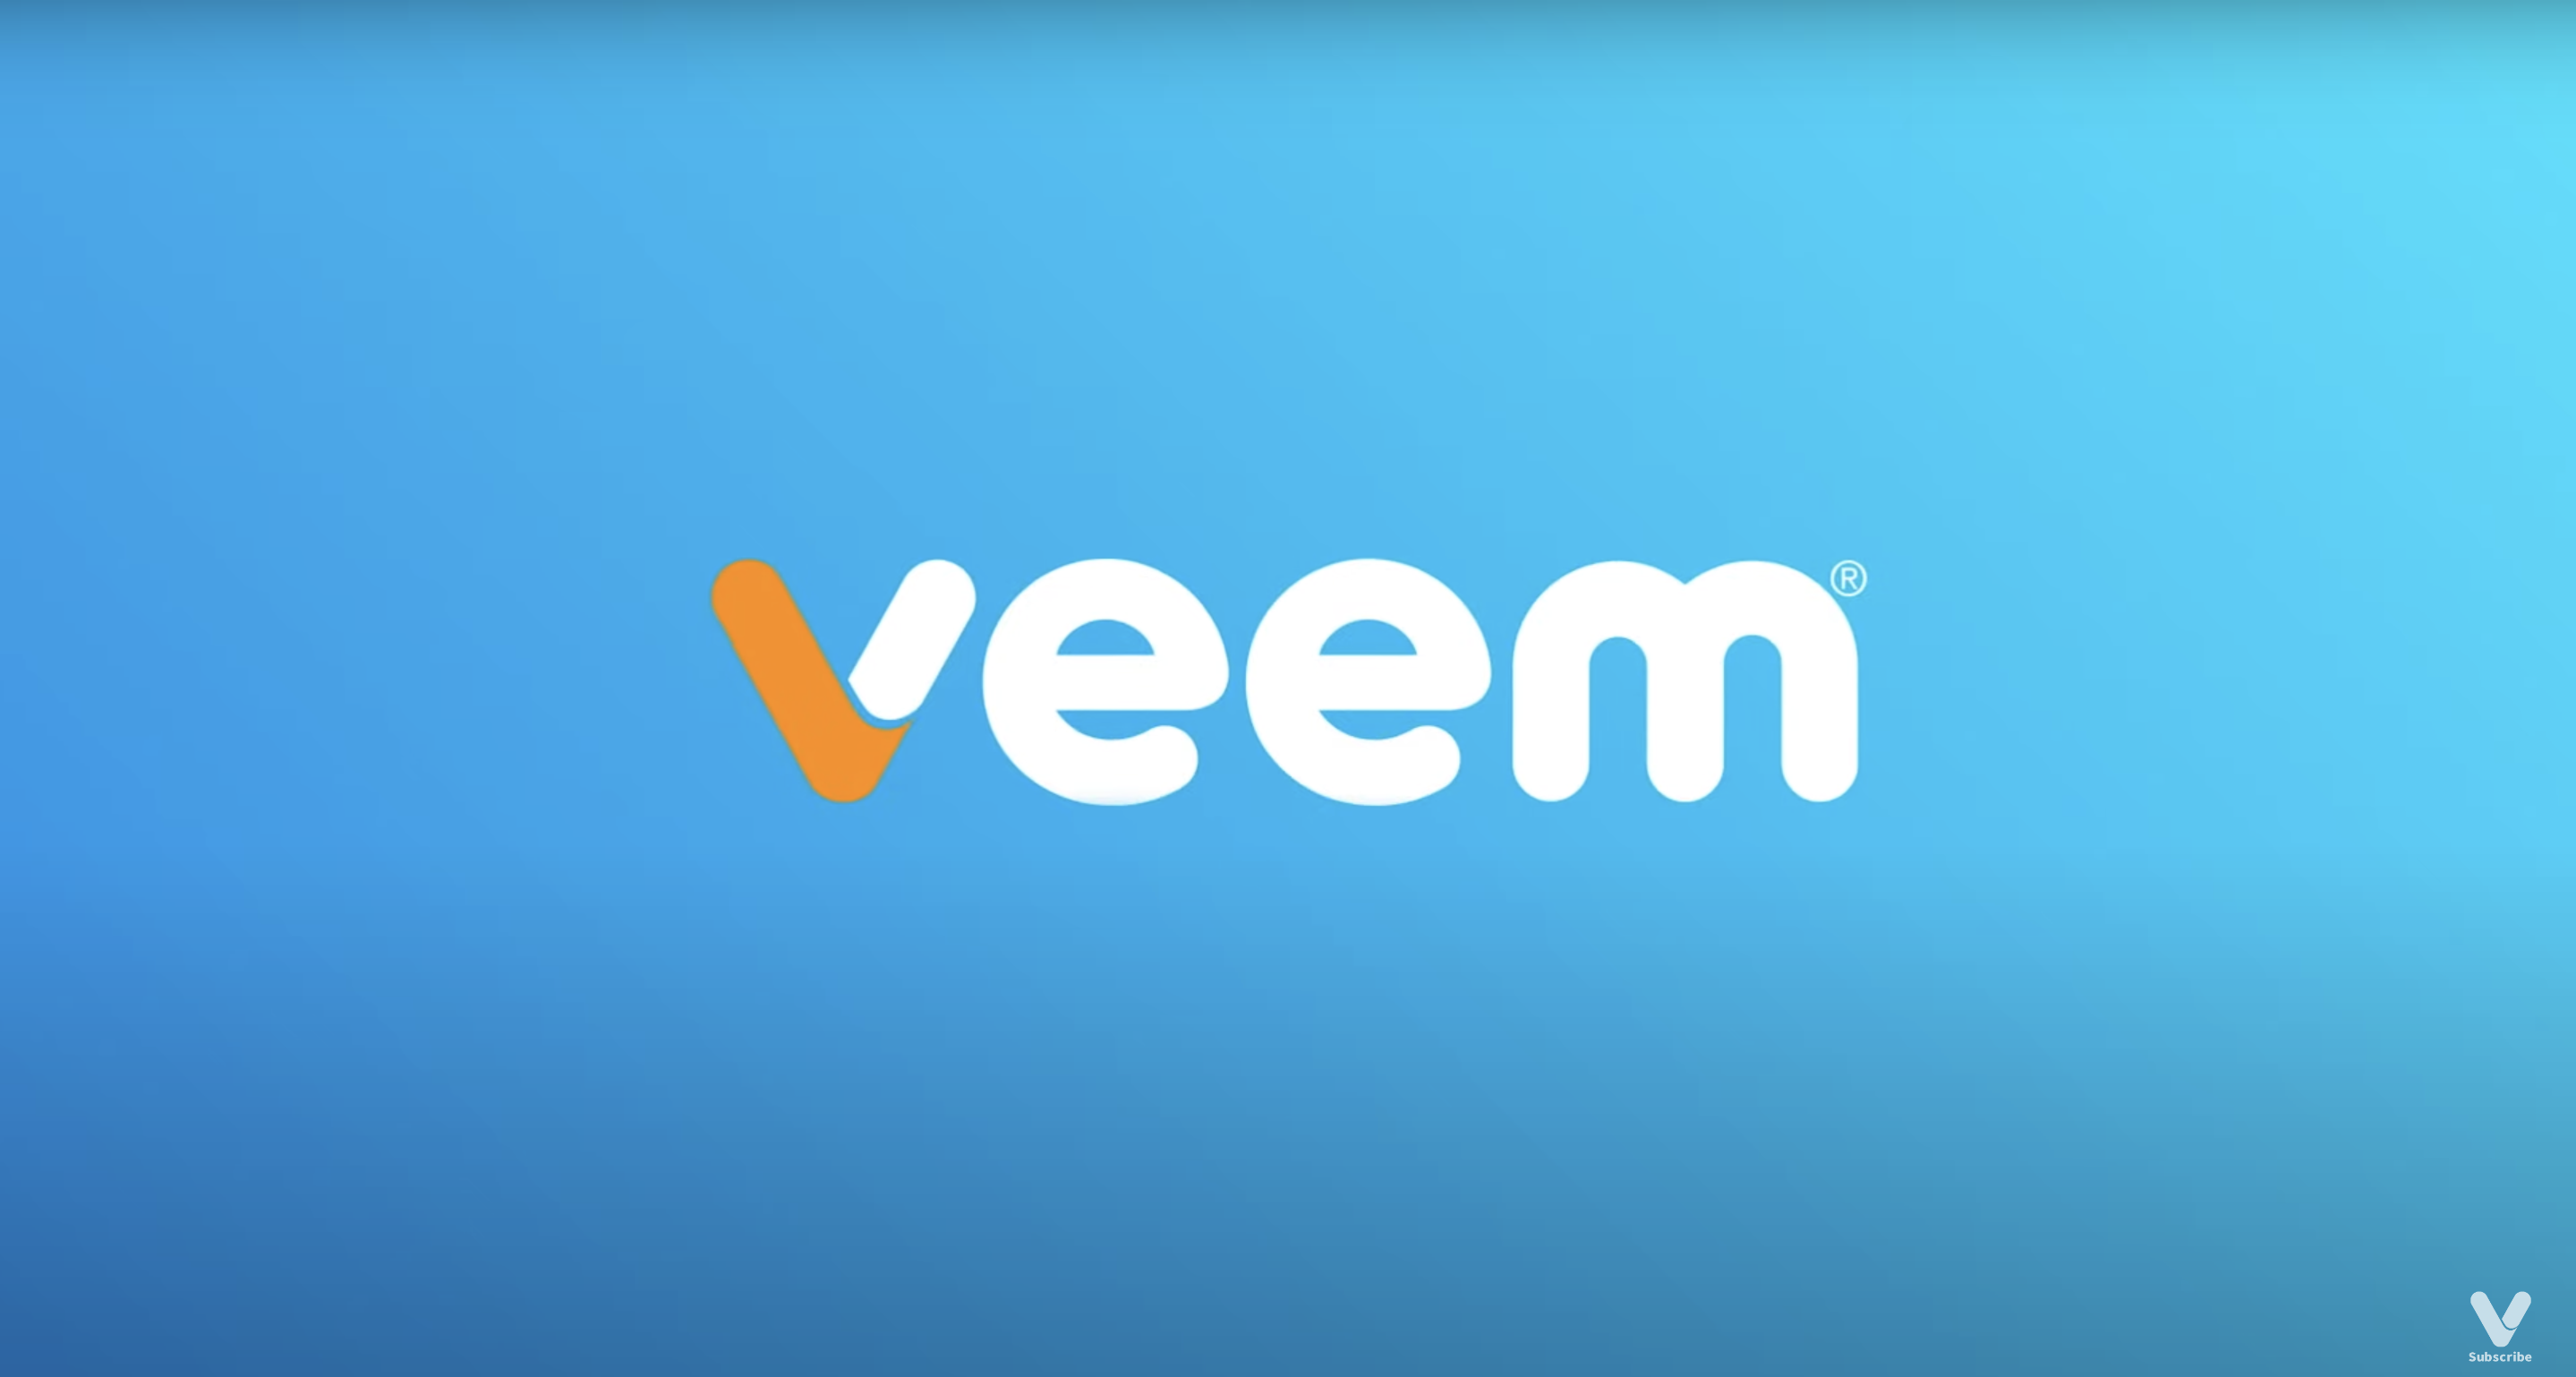 Buy Veem Accounts